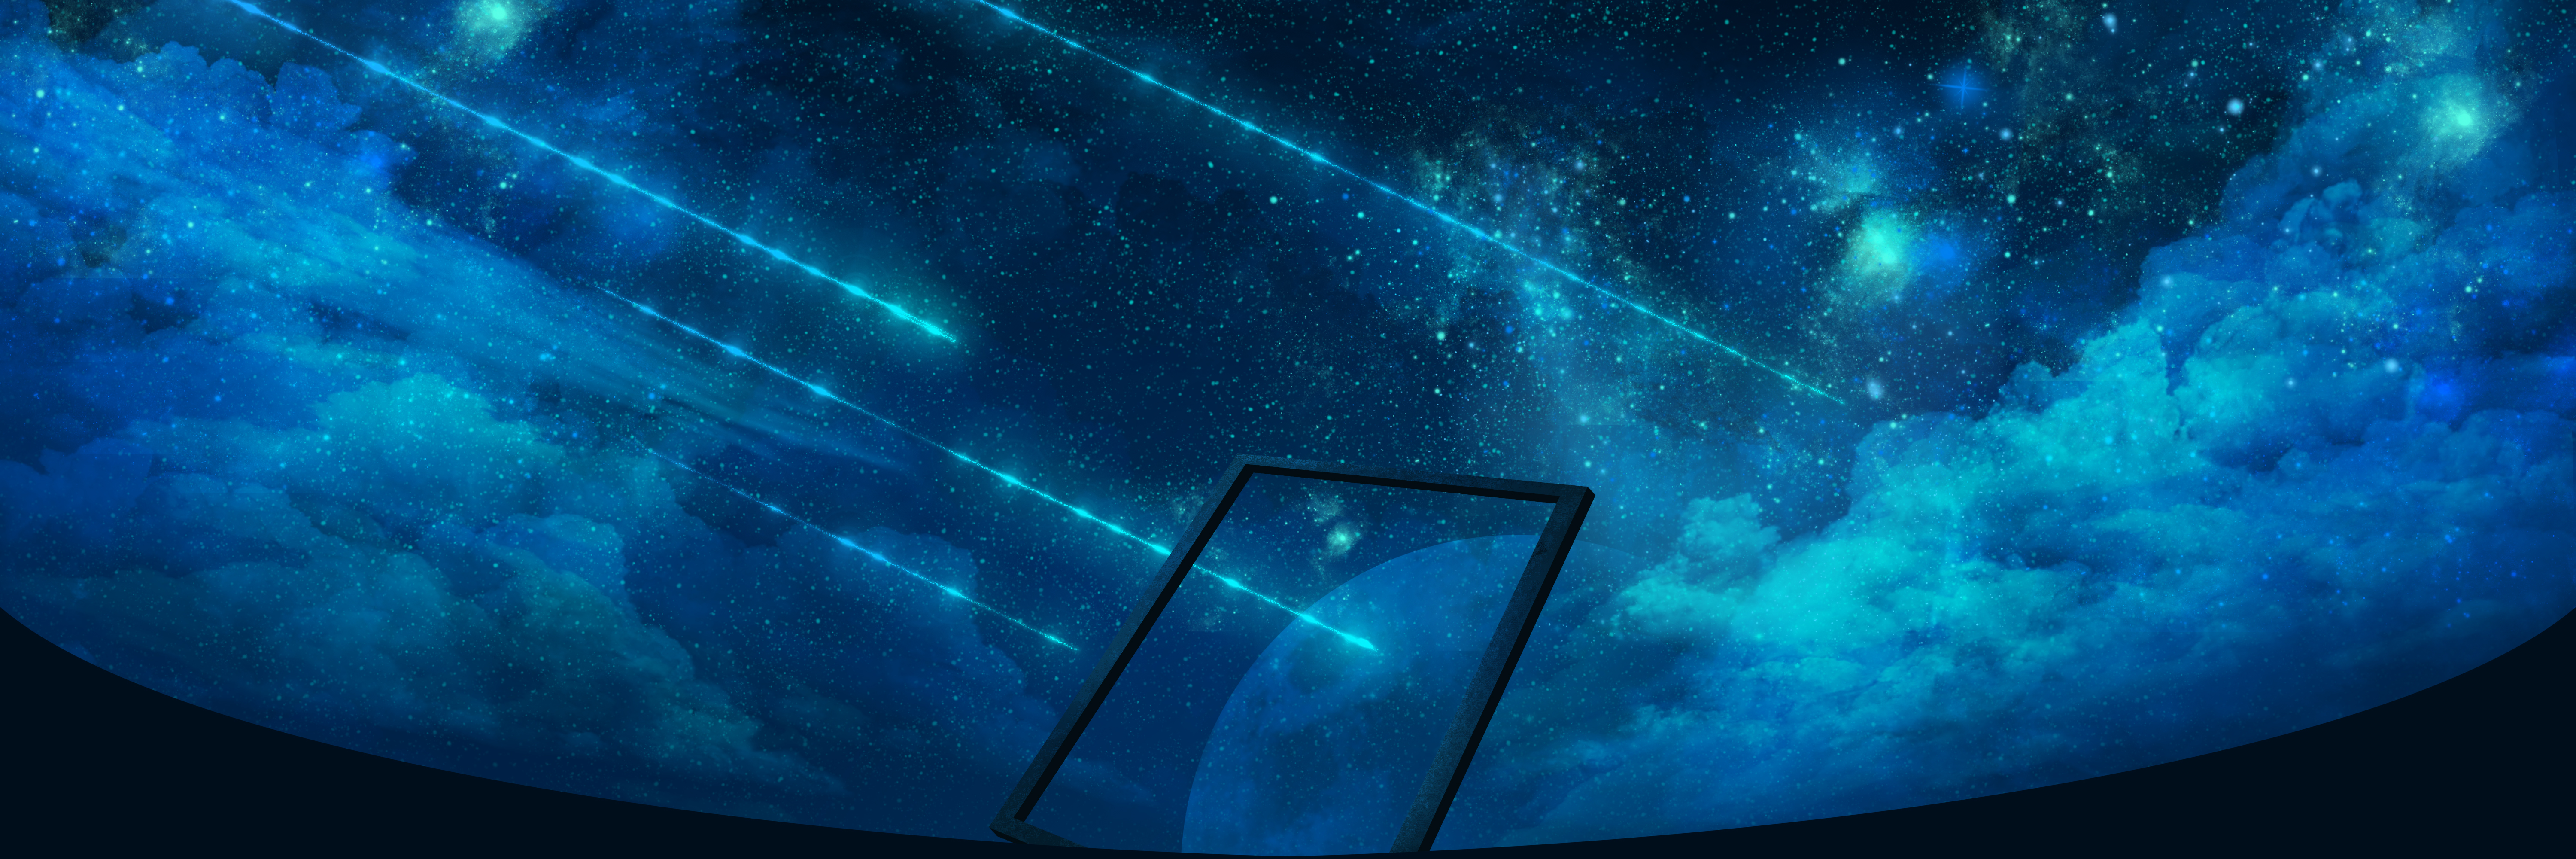 Artistic Sky HD Wallpaper by オトソラ